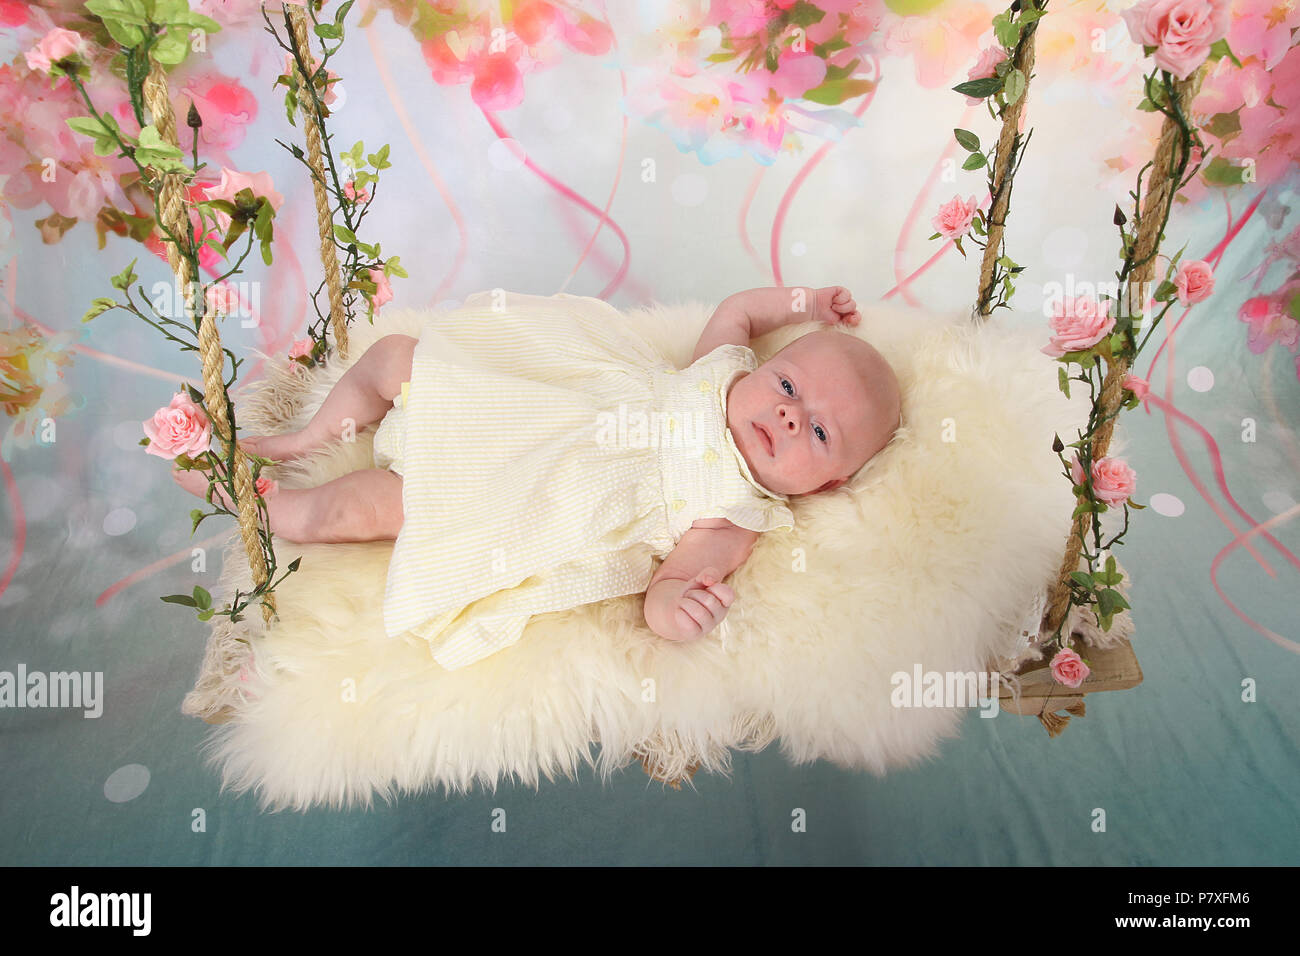 1 month baby girl photoshoot